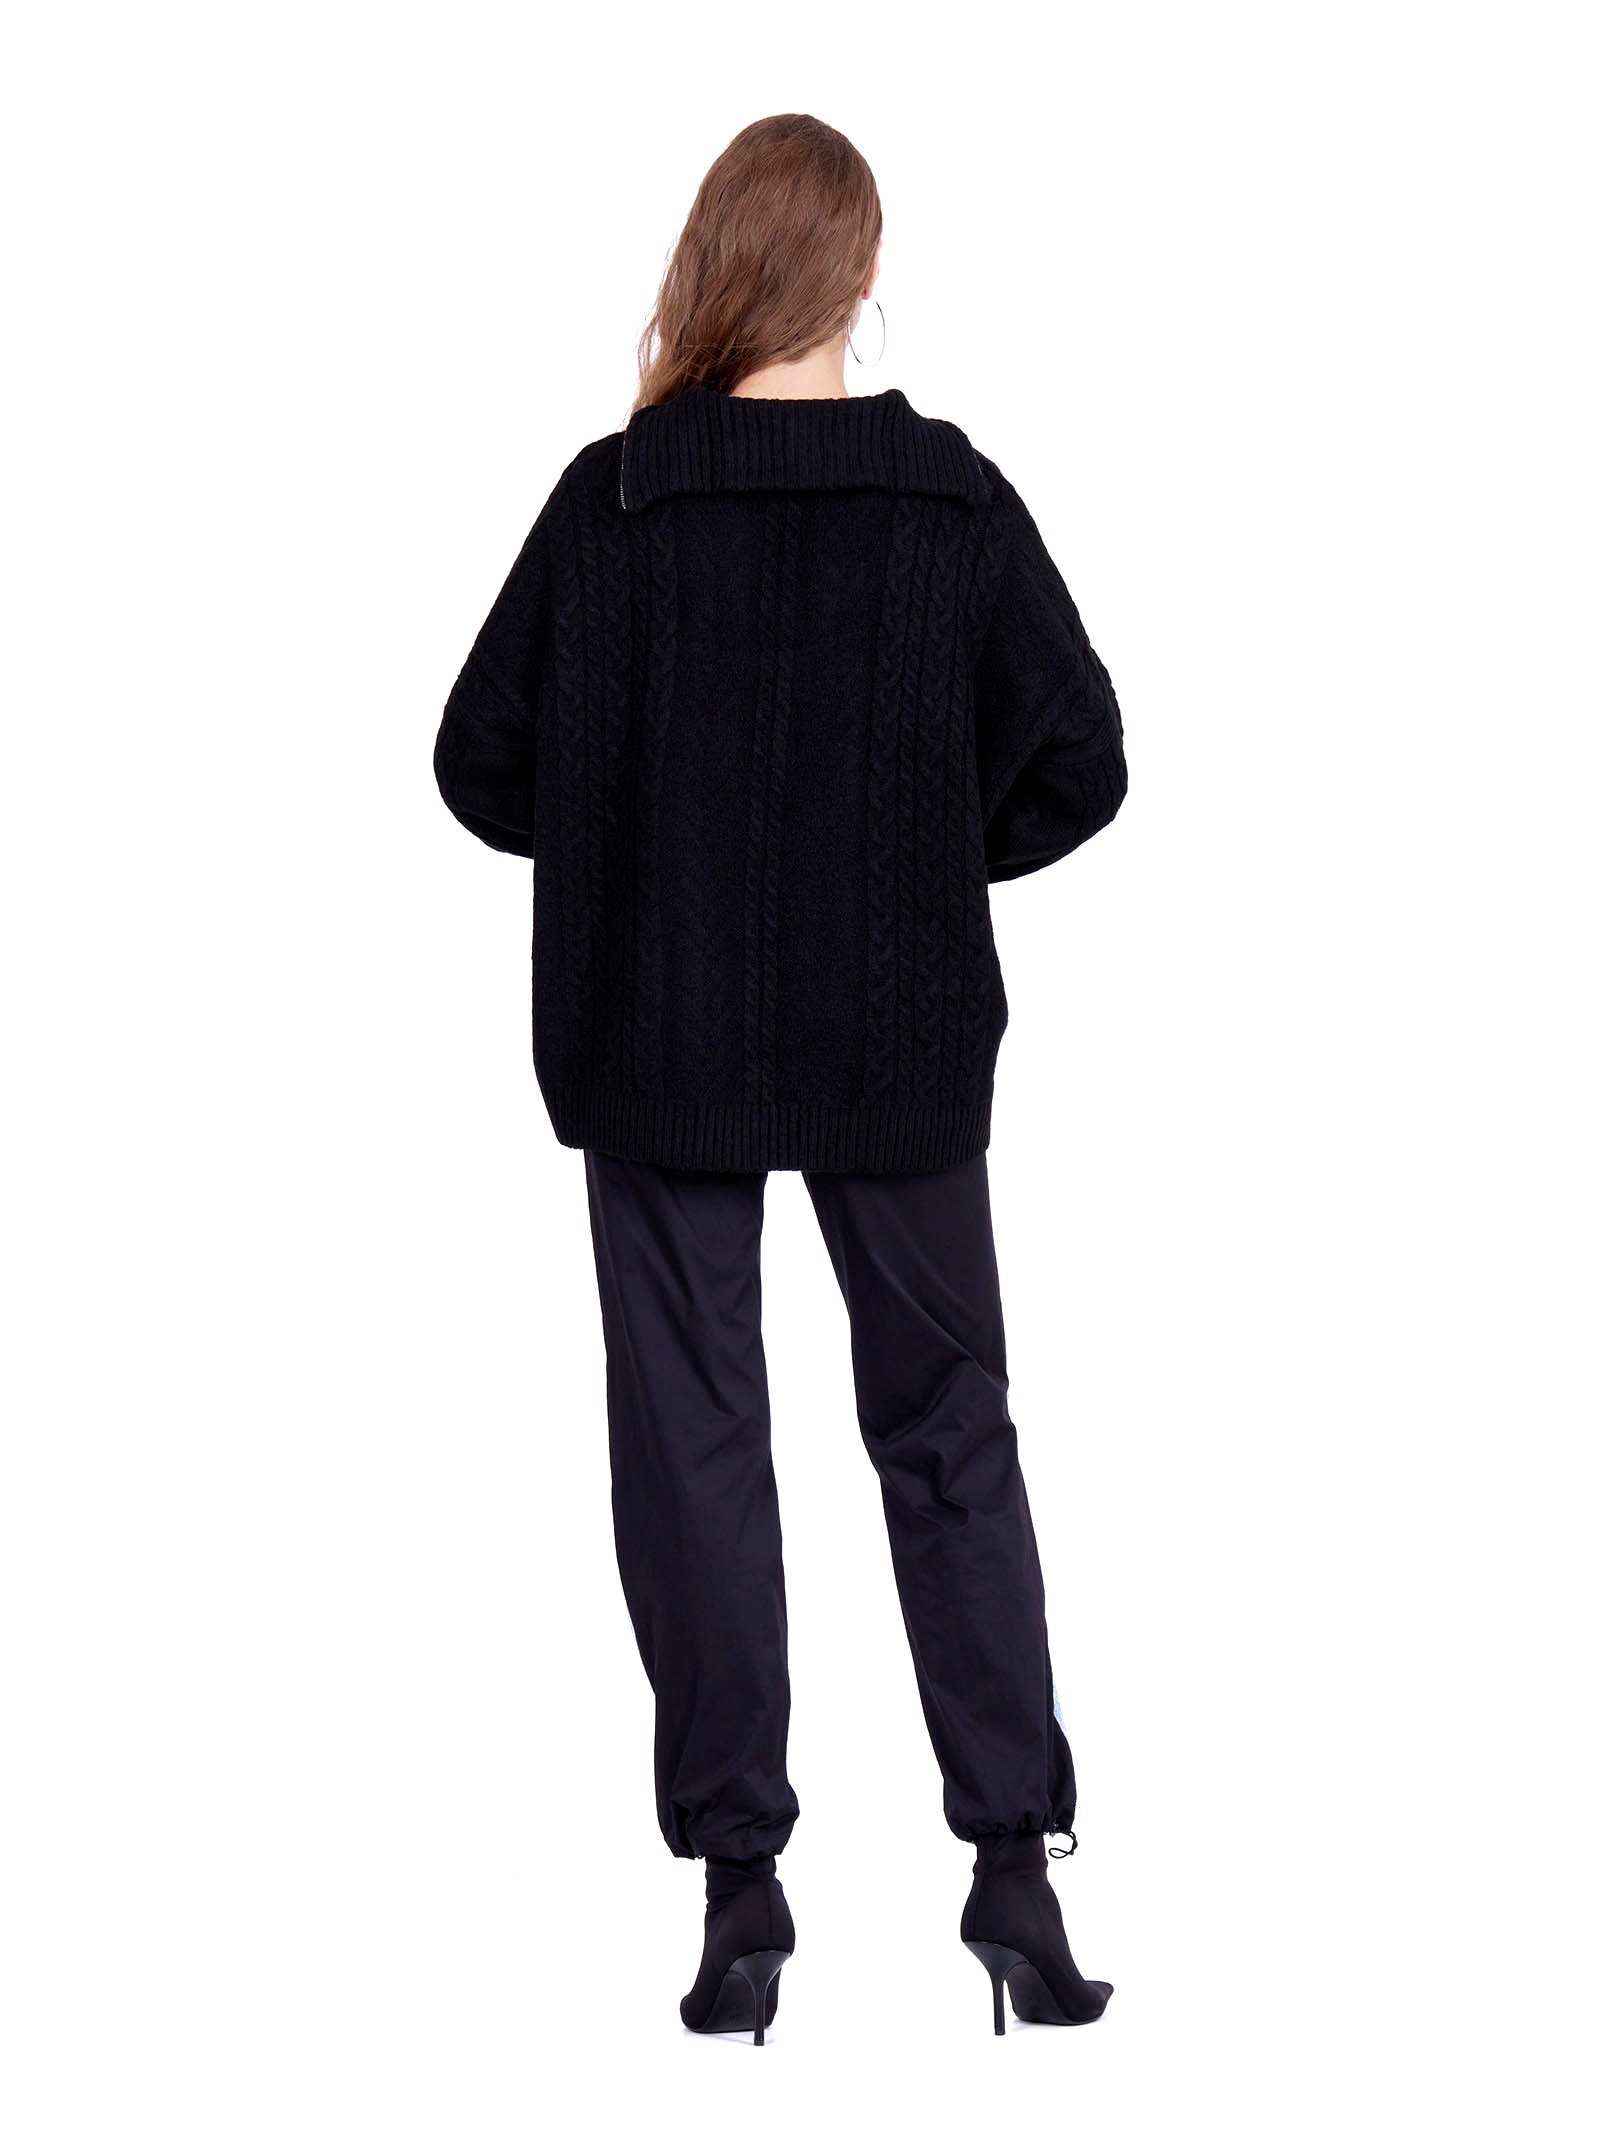 Open collar Knitwear Black Oversize Sweater with ziplock 